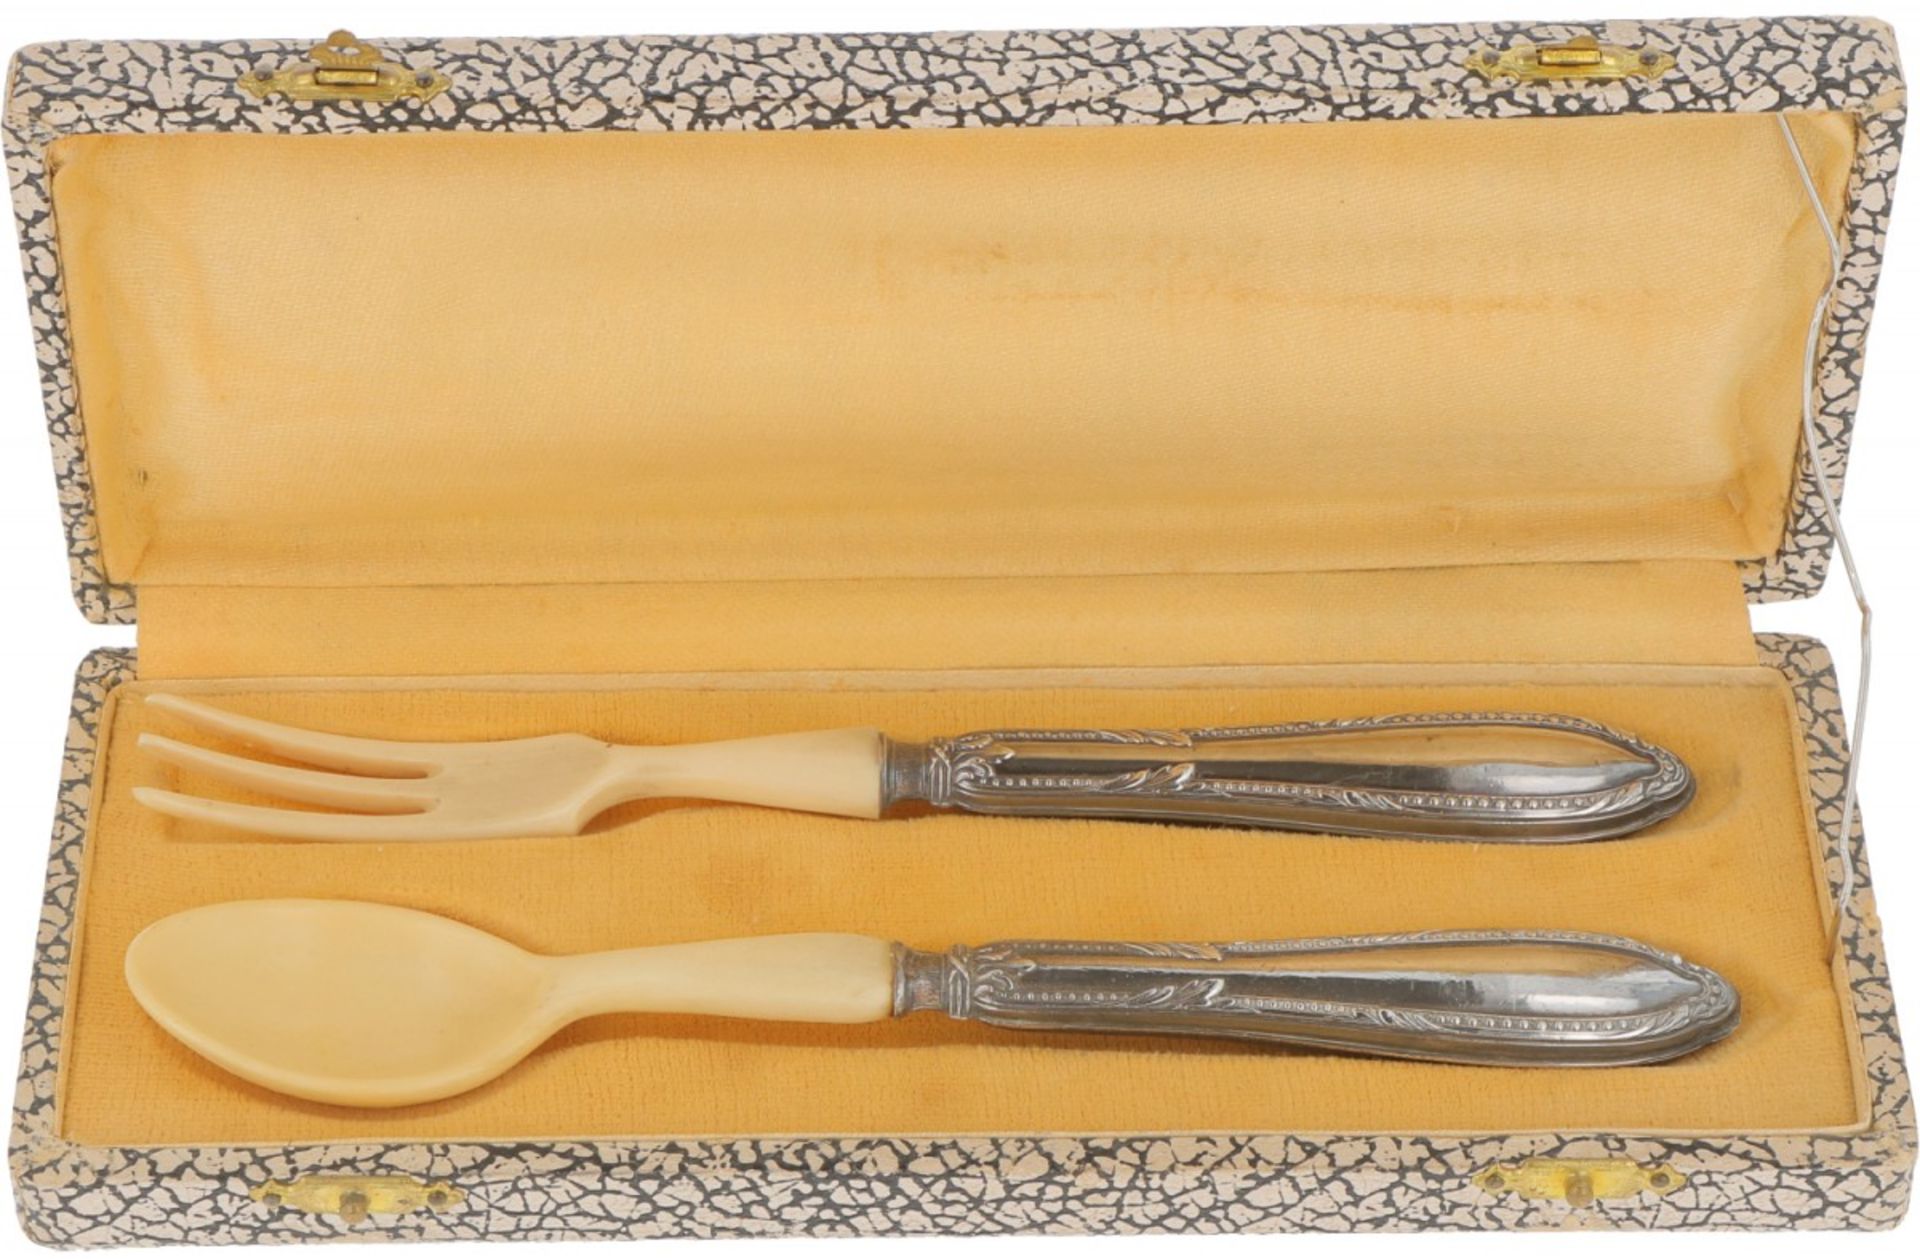 (2) Piece silver cutlery set.